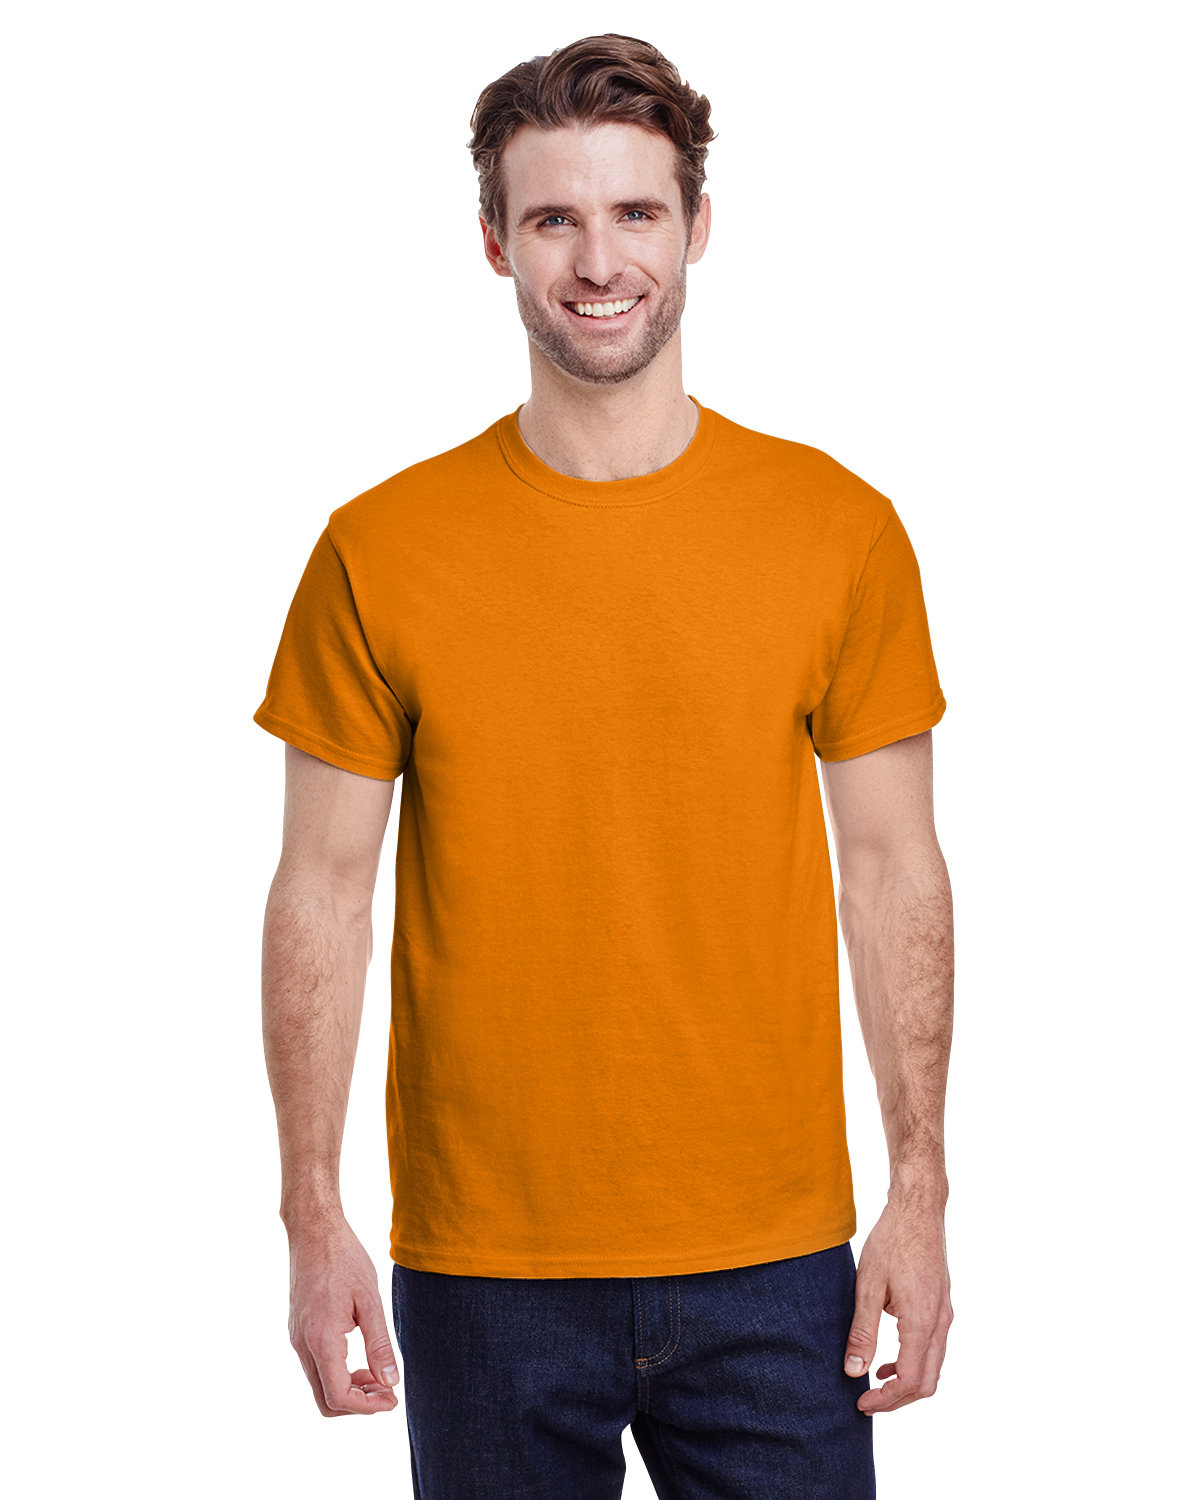 Gildan Adult Ultra Cotton® T-Shirt s orange 